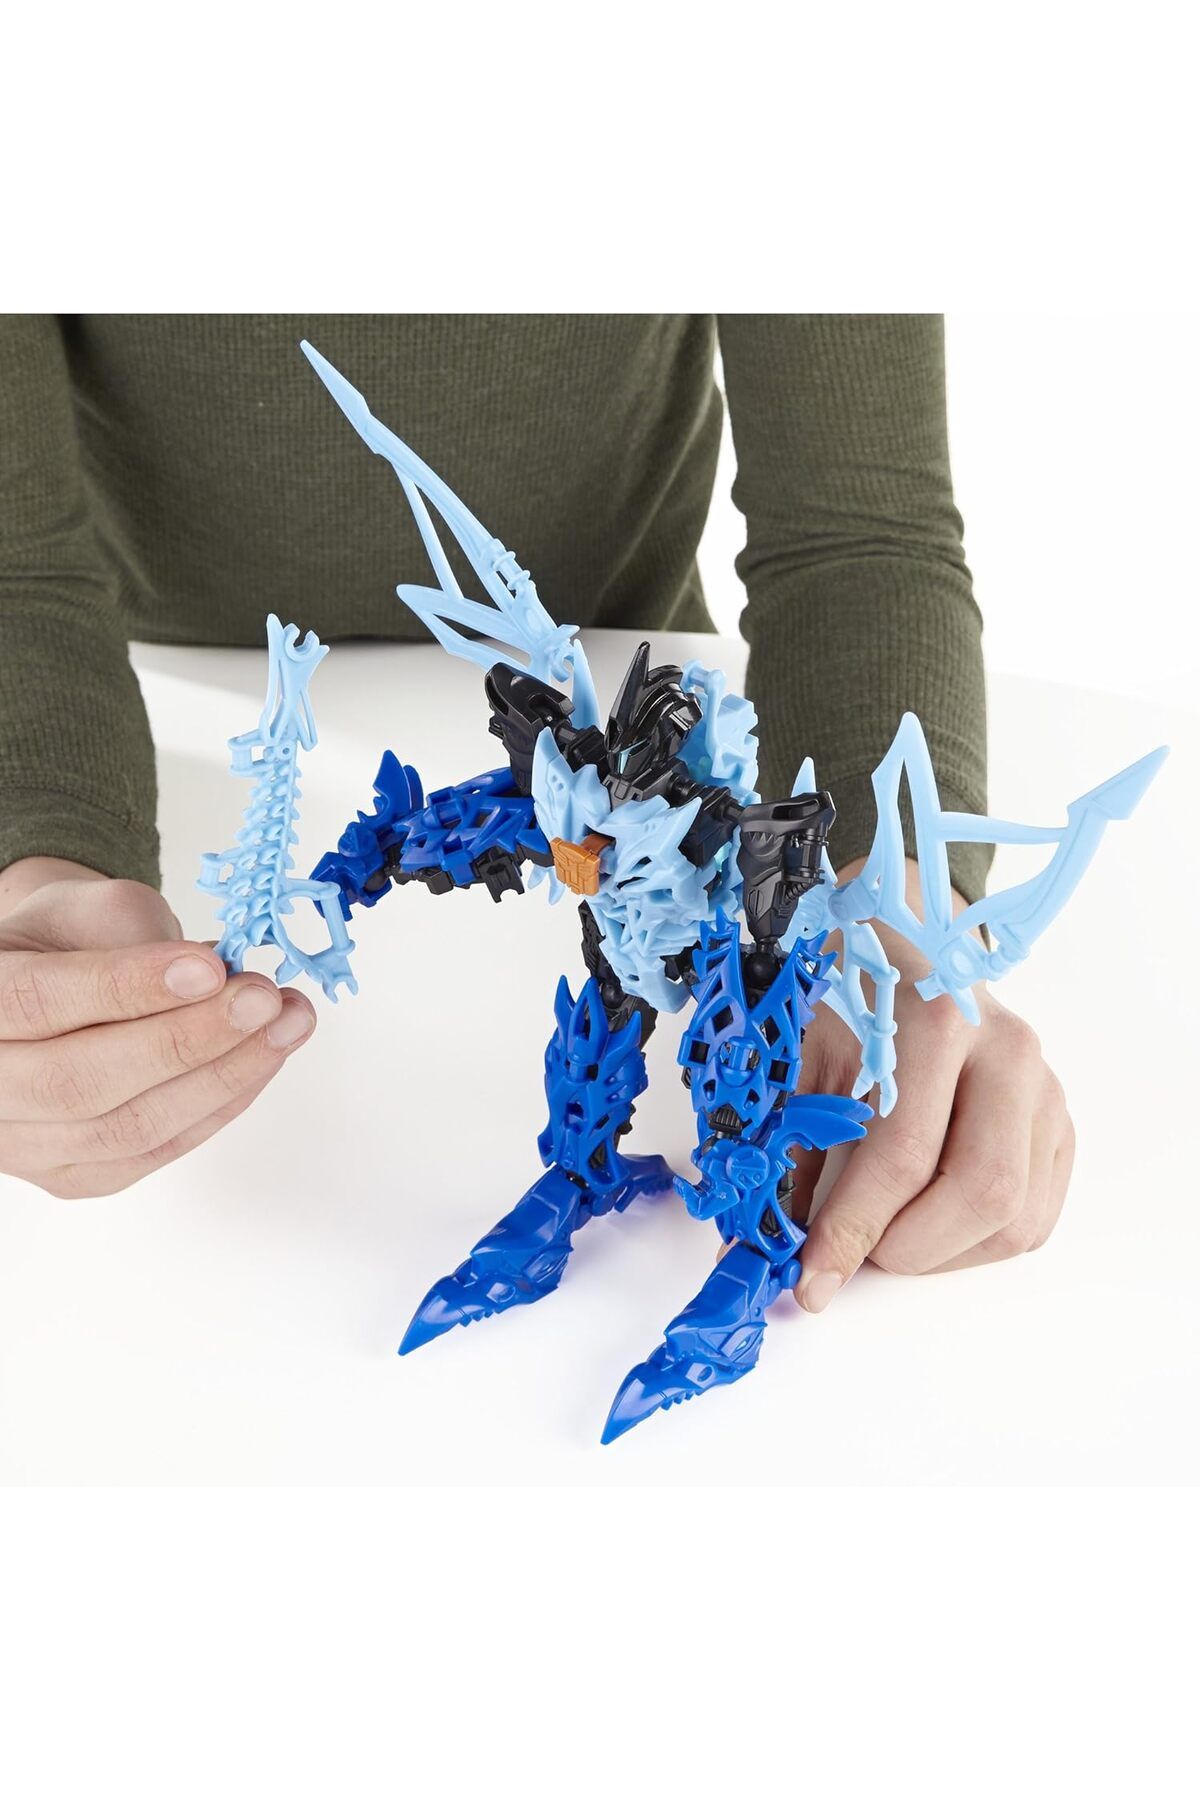 transformers 4 Construct Bots Dinobot - Strafe